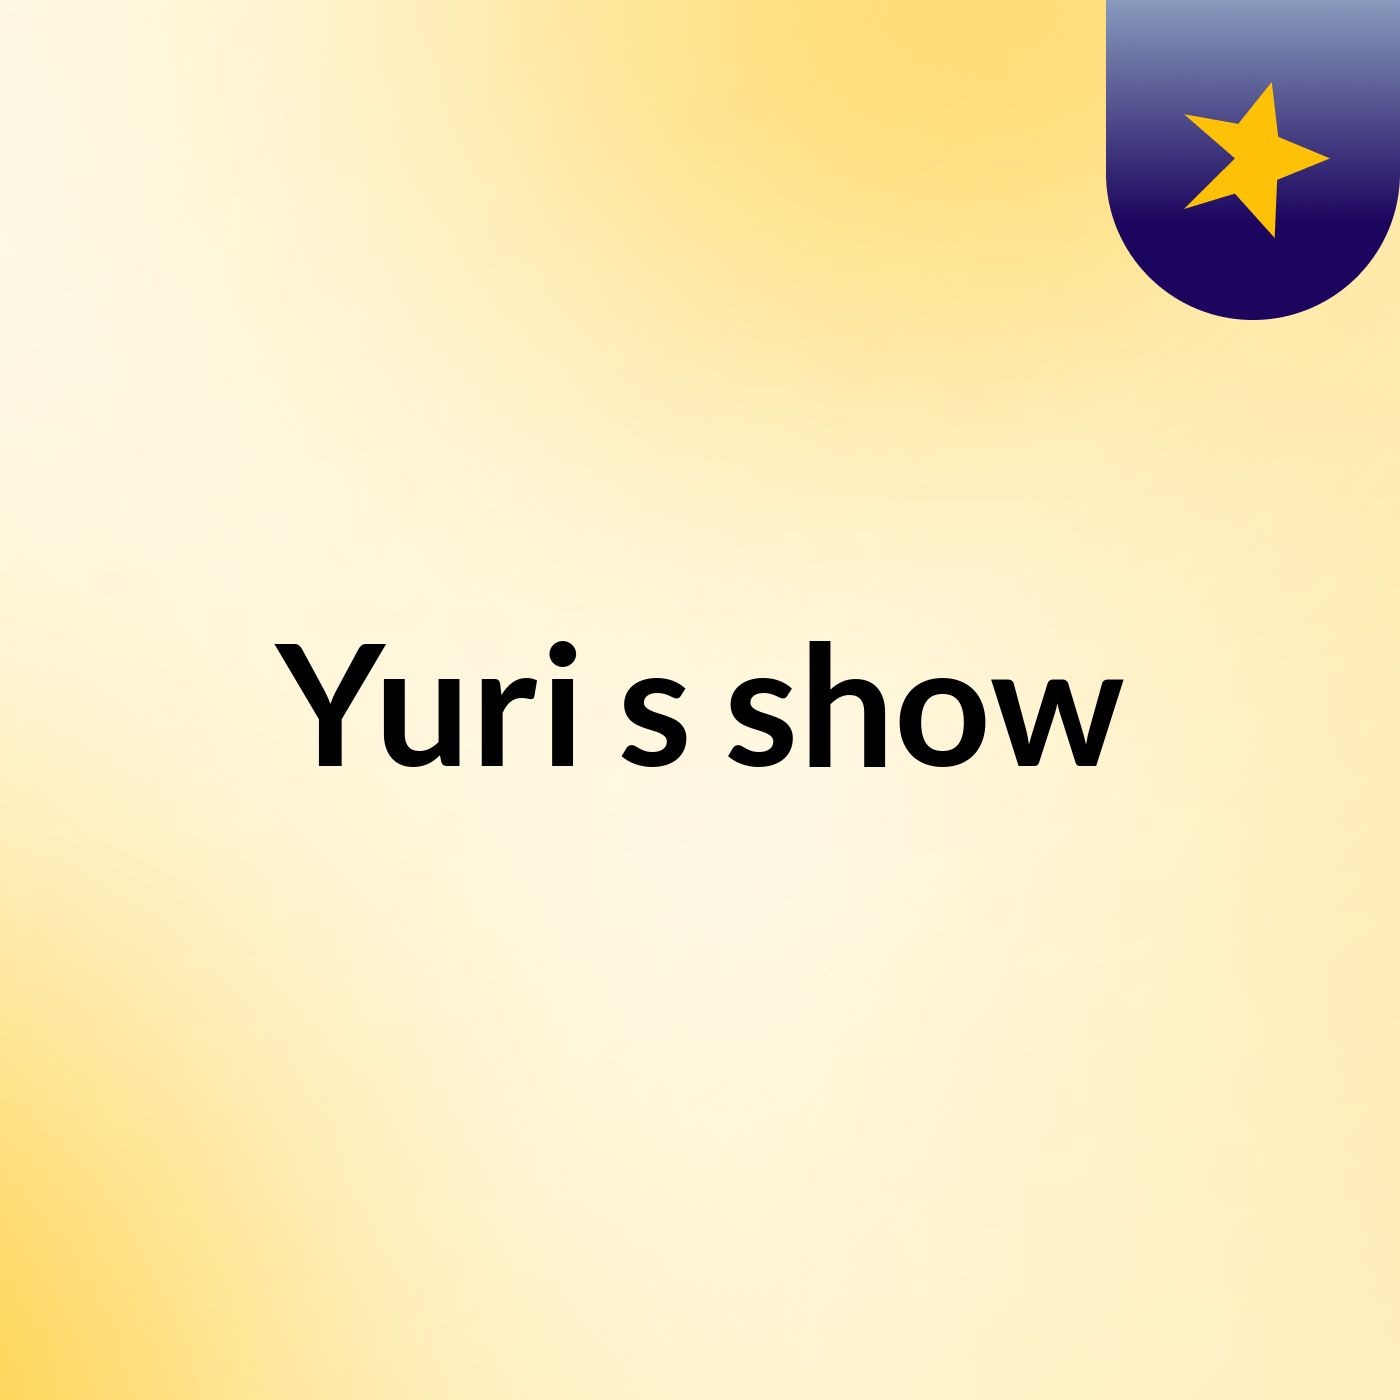 Yuri's show